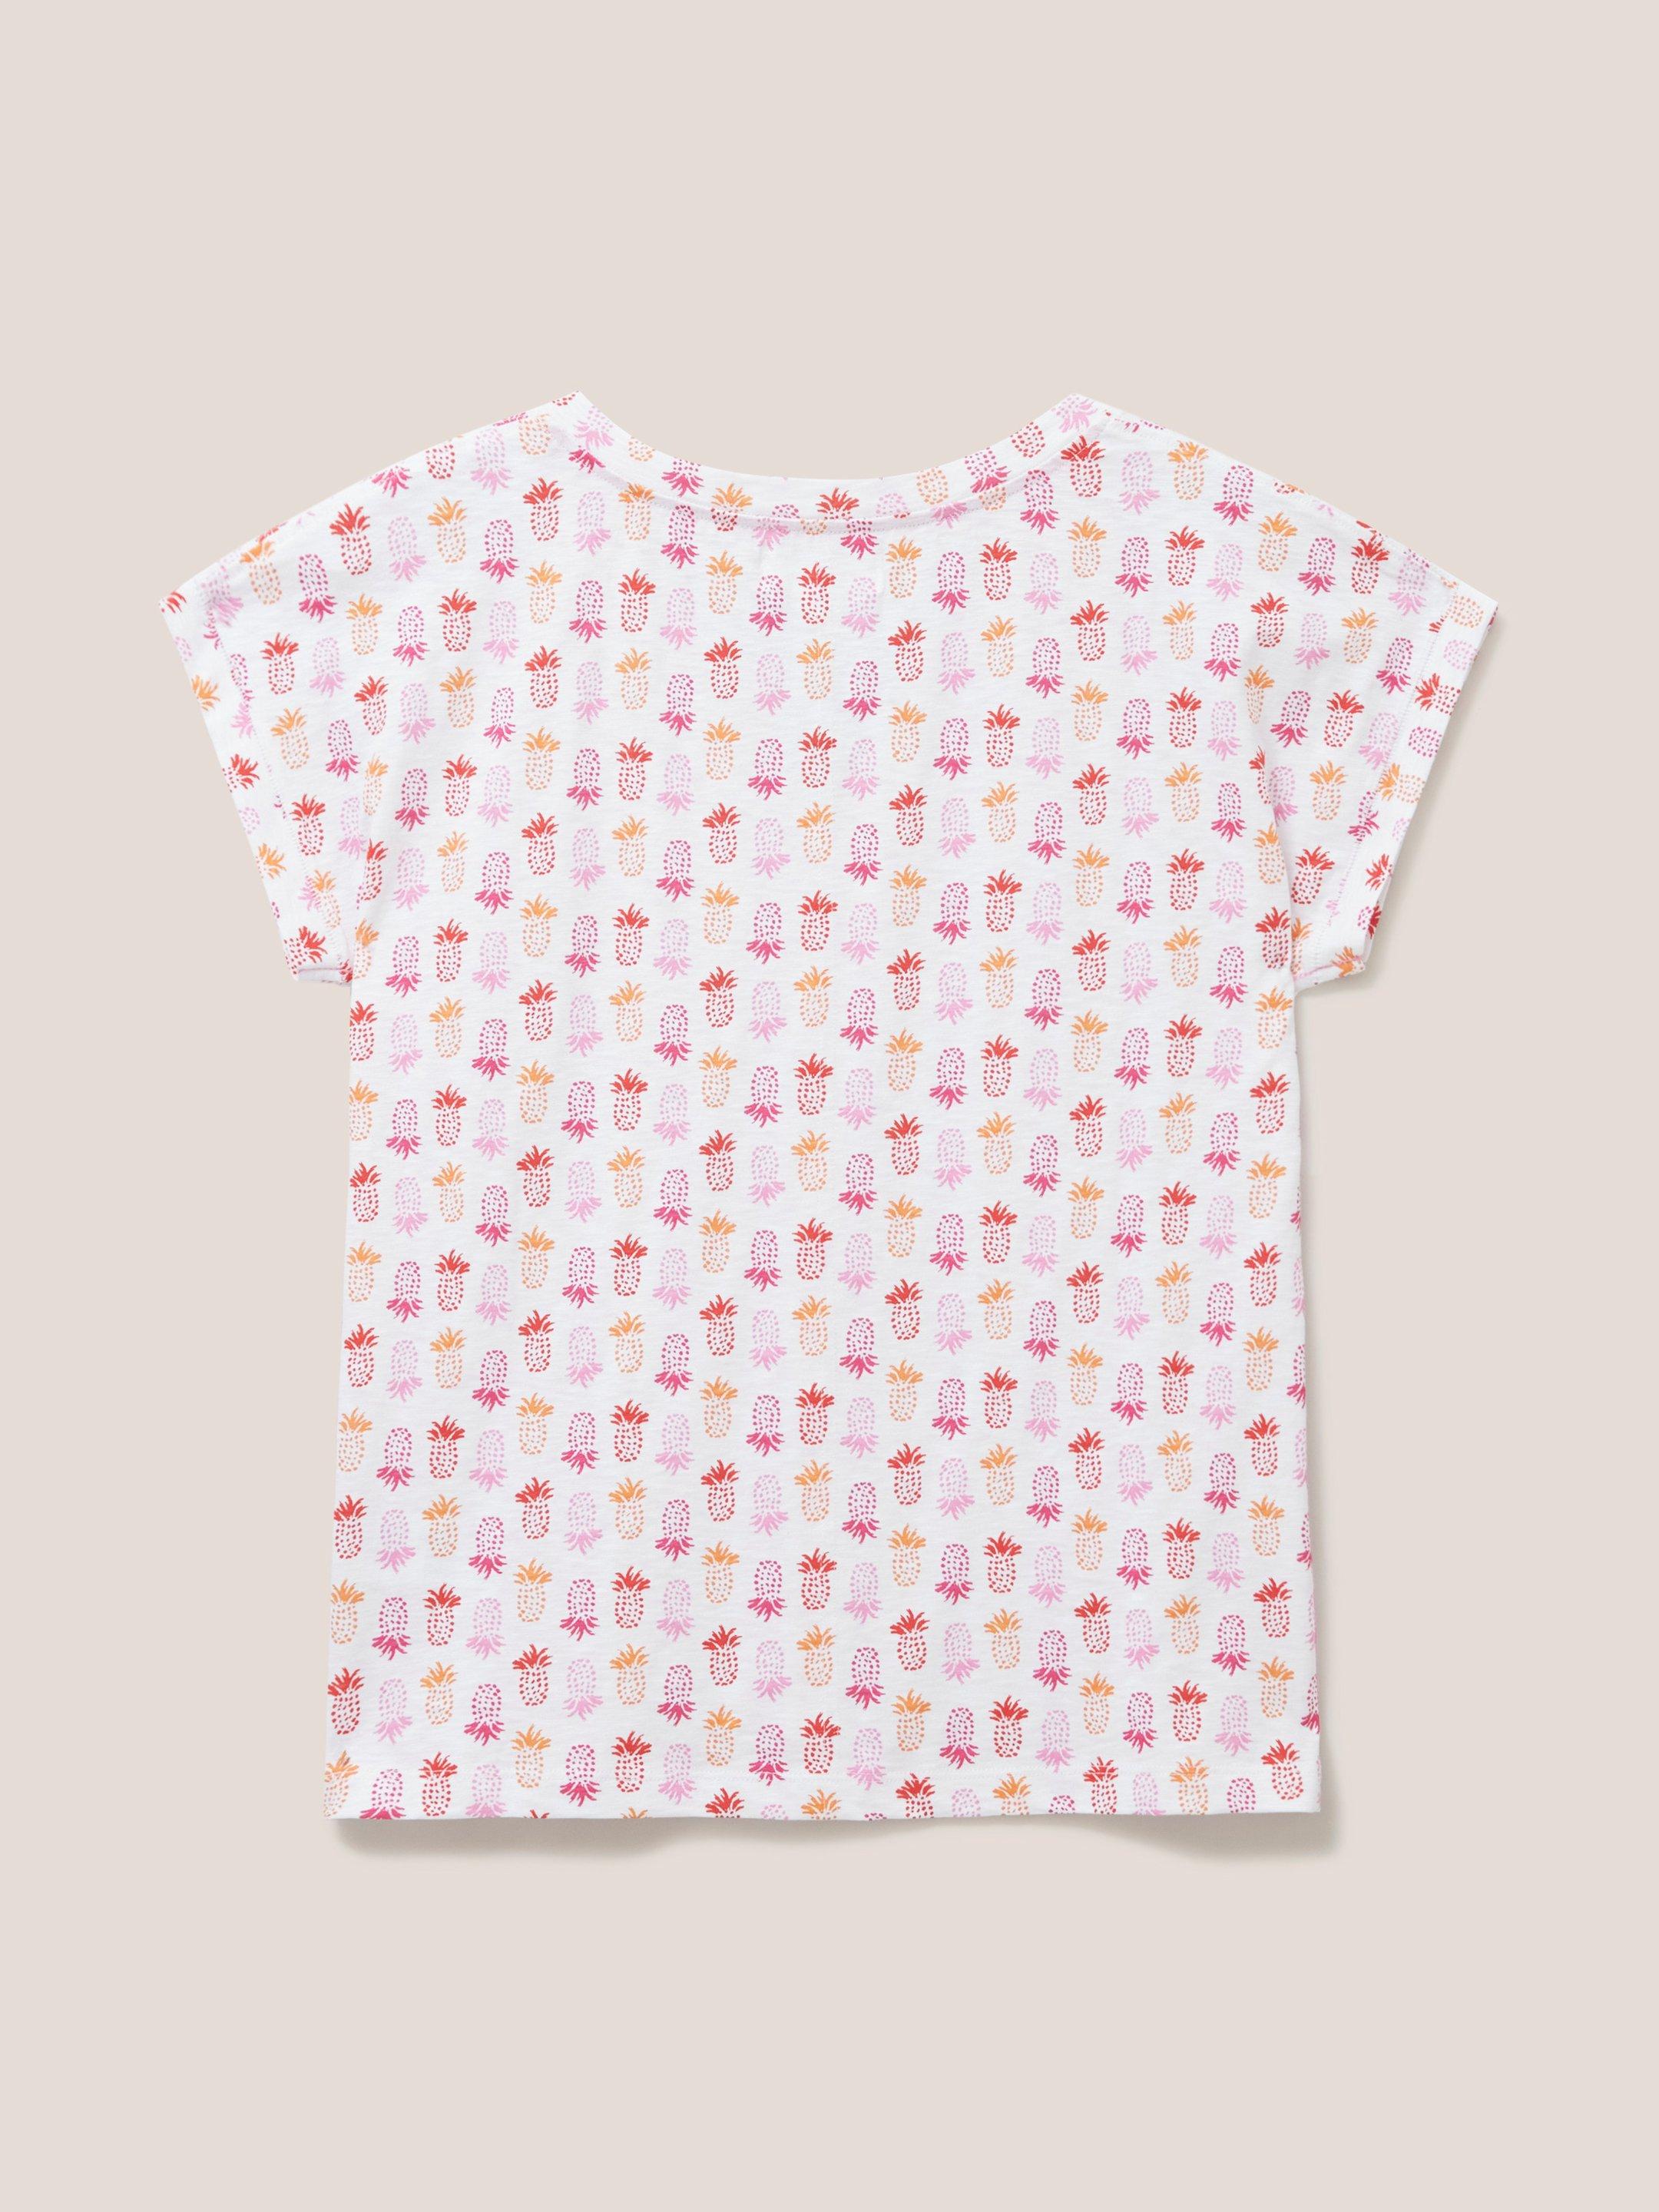 Nelly Print Teeshirt in ORANGE PRINT | White Stuff